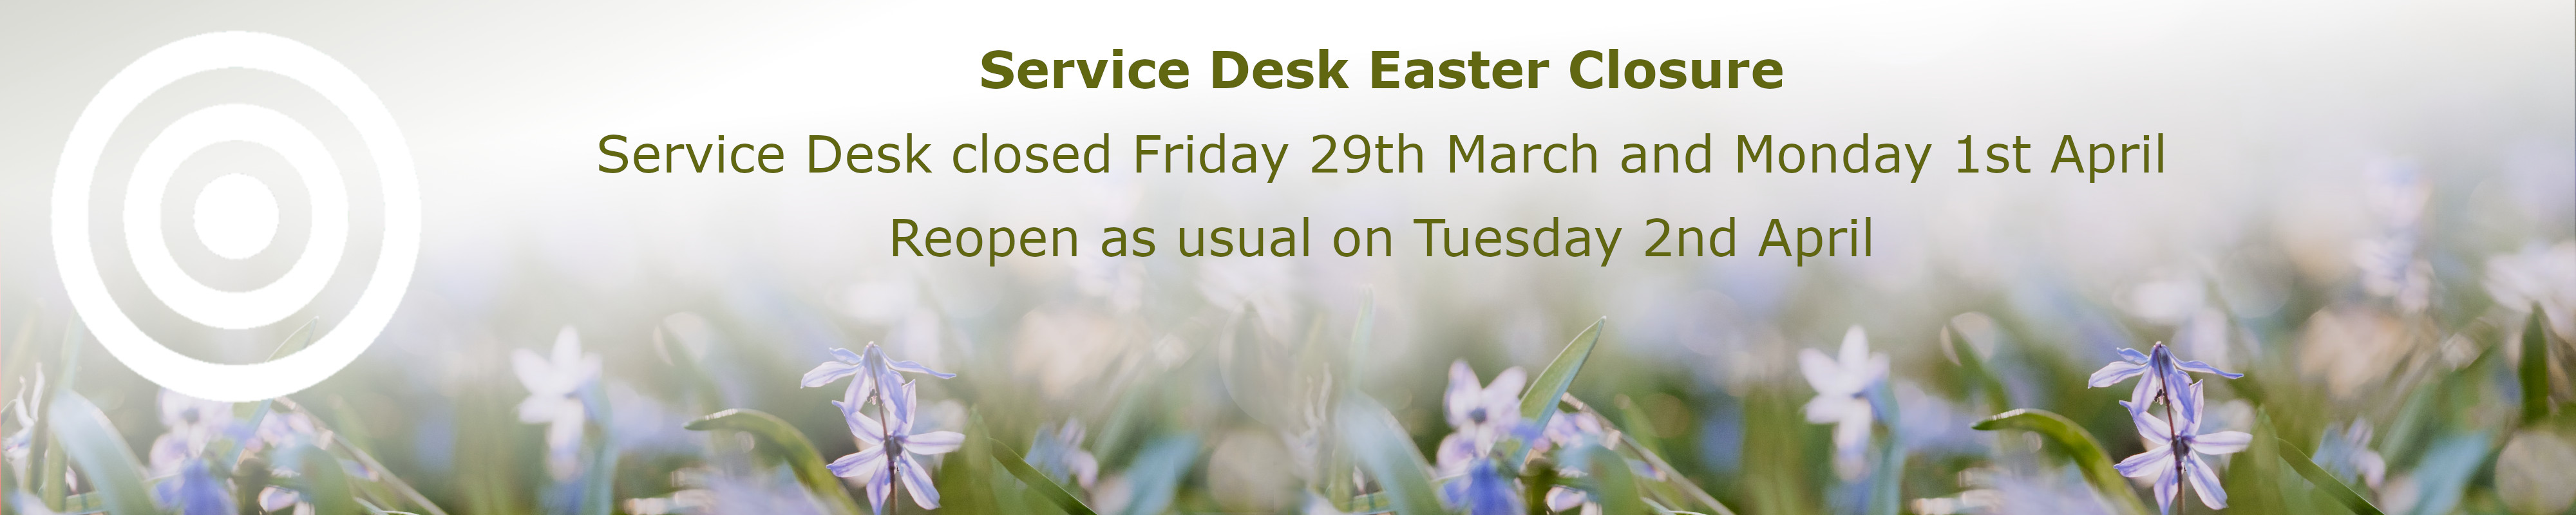 Service desk Easter closure 